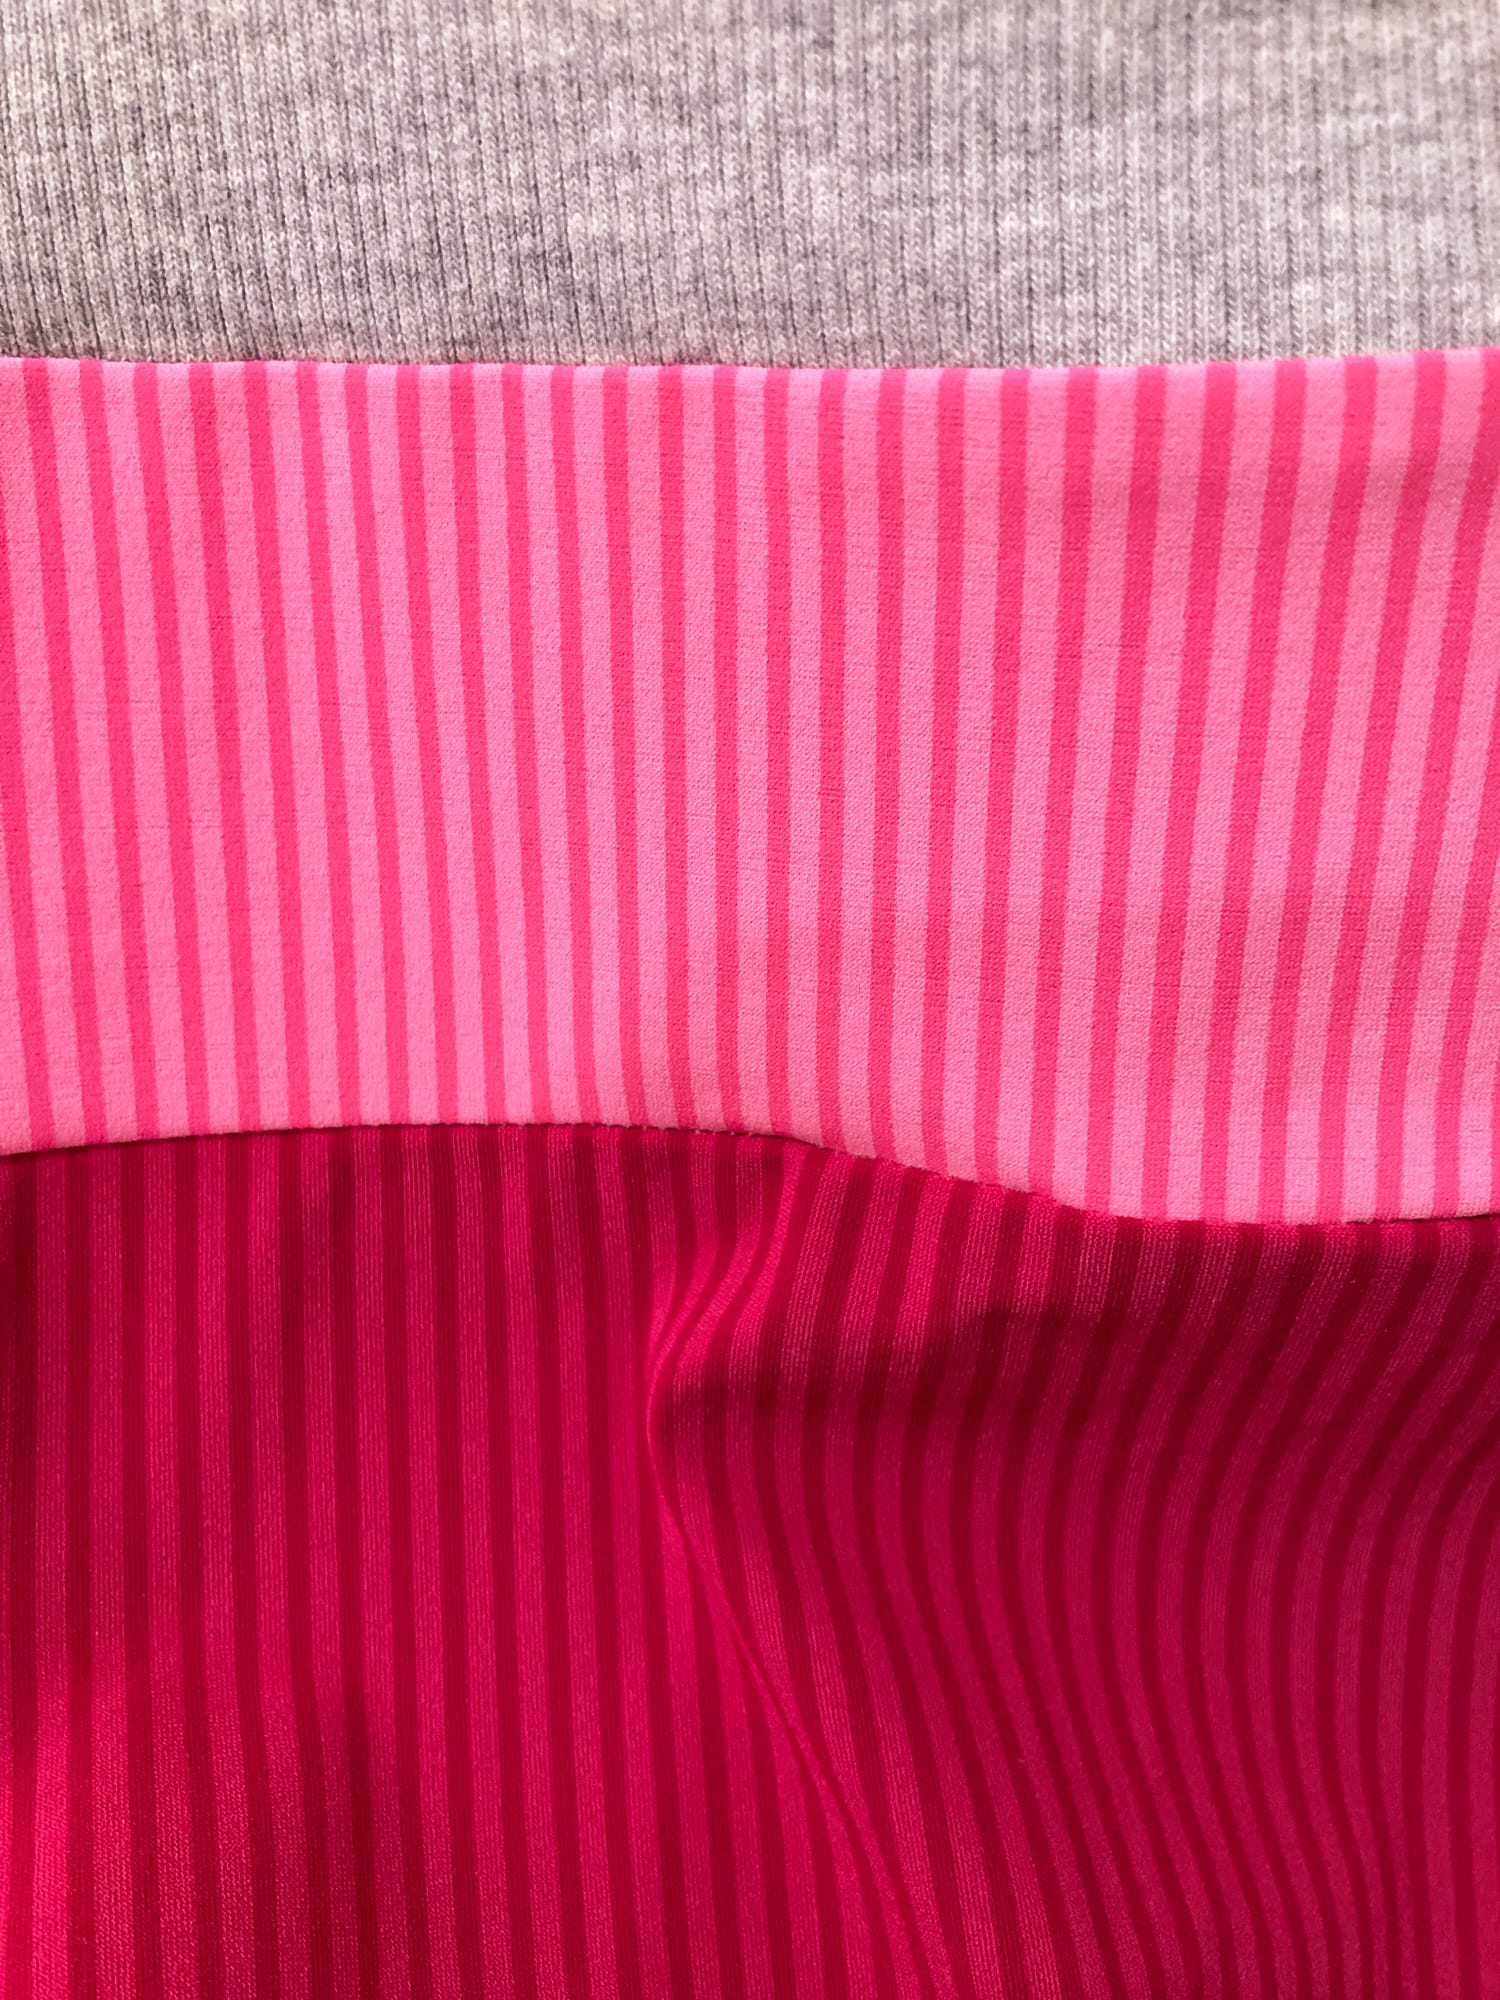 Dirk Bikkembergs grey marle rib knit tank top with striped pink panels